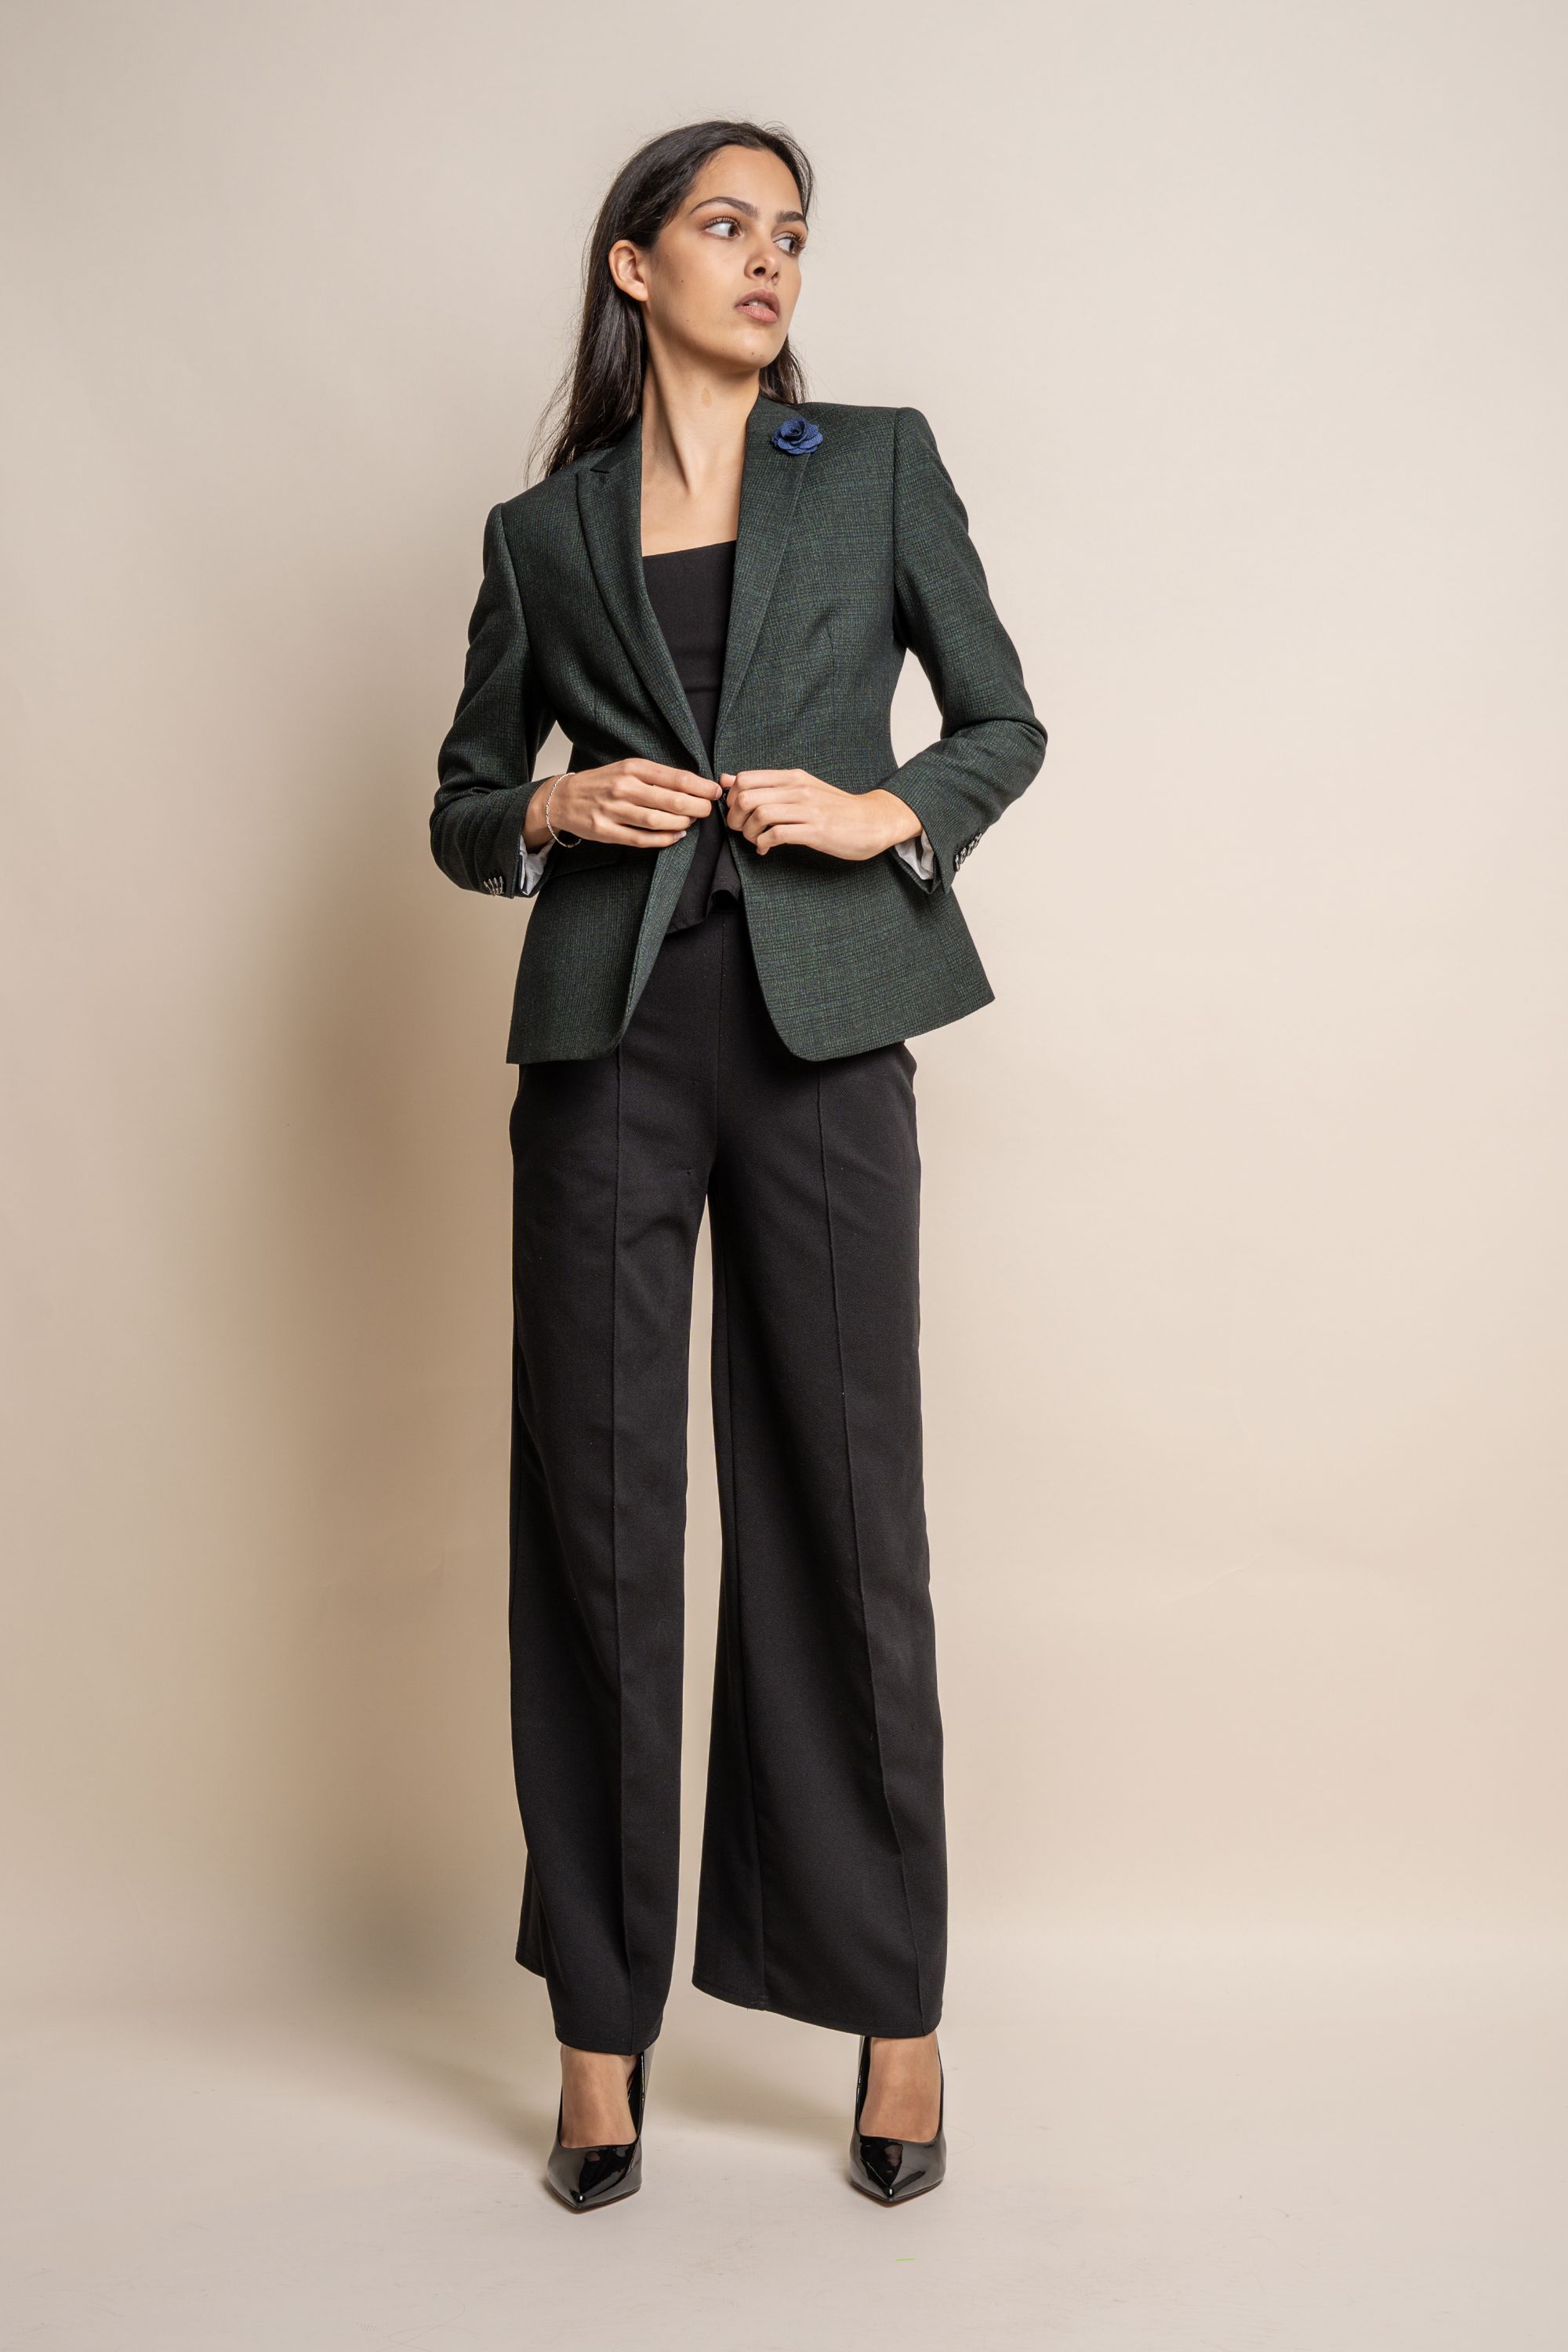 Women's Slim Fit Houndstooth Check Blazer - CARIDI - Olive Green